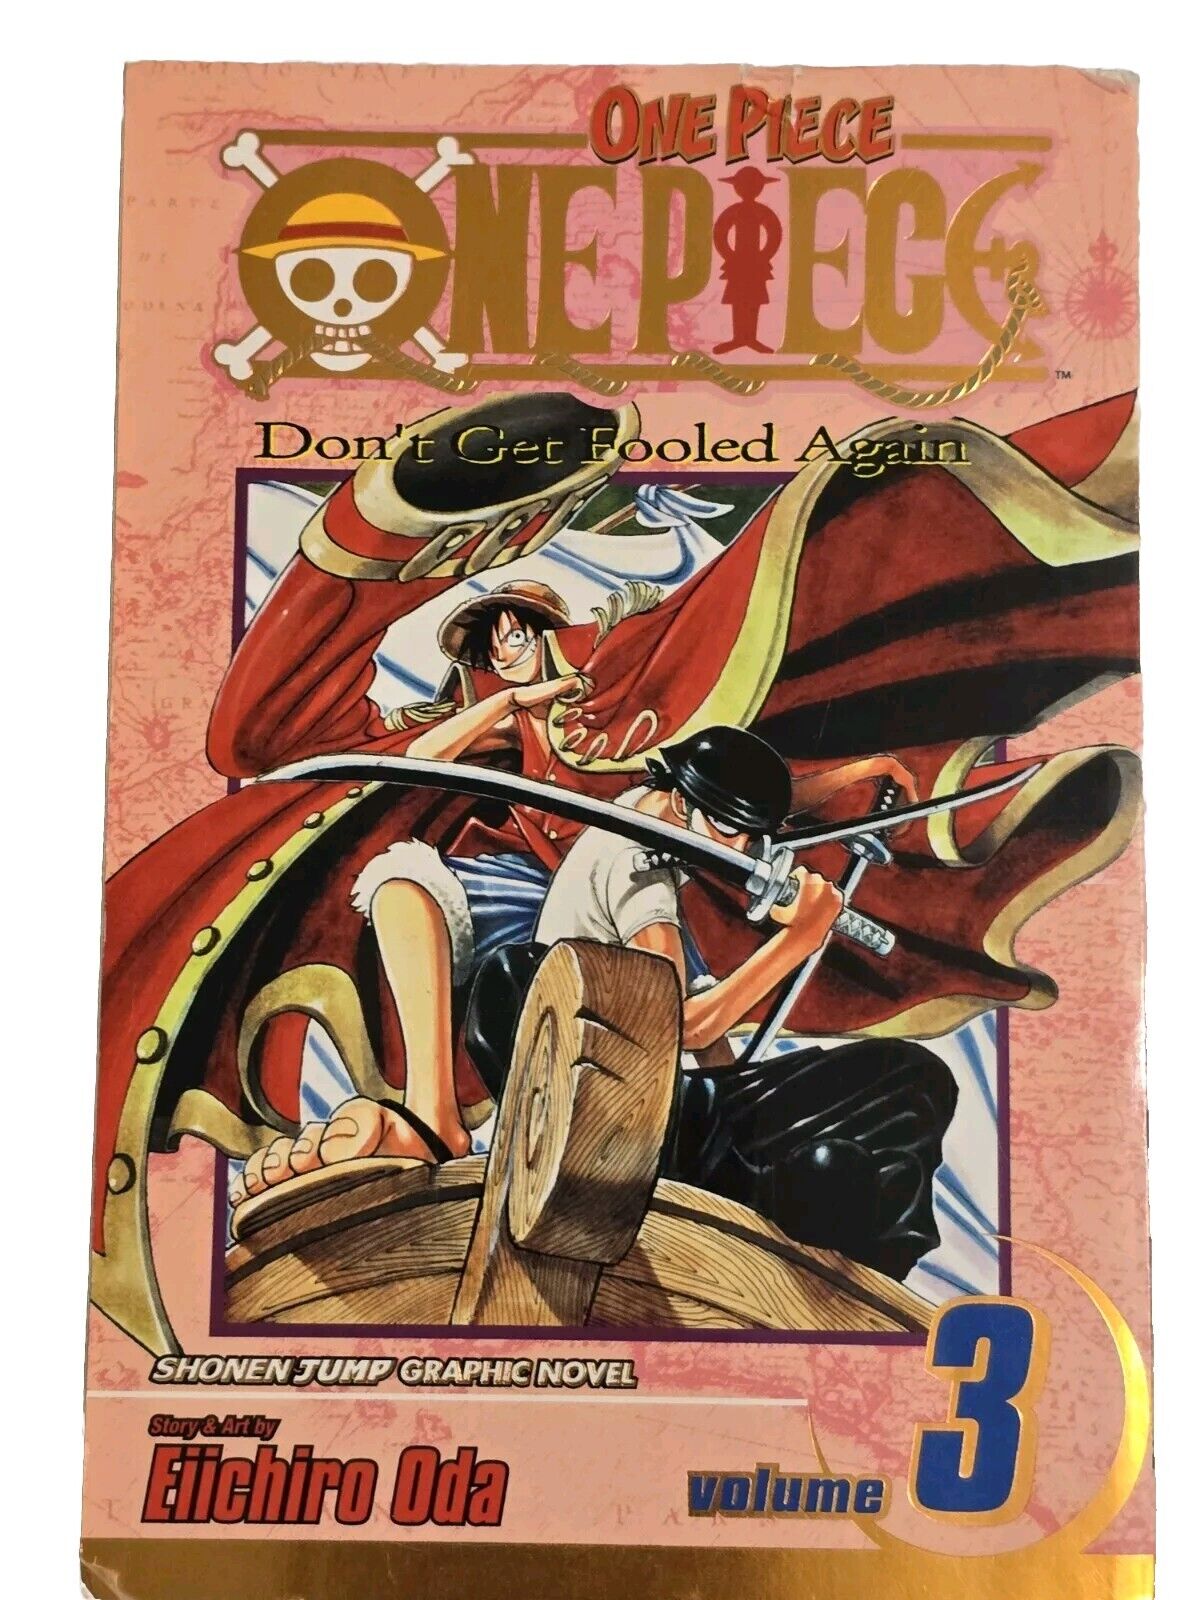 One Piece Manga Volume 3 Don’t Get Fooled Again  By Eiichiro Oda English Graphic